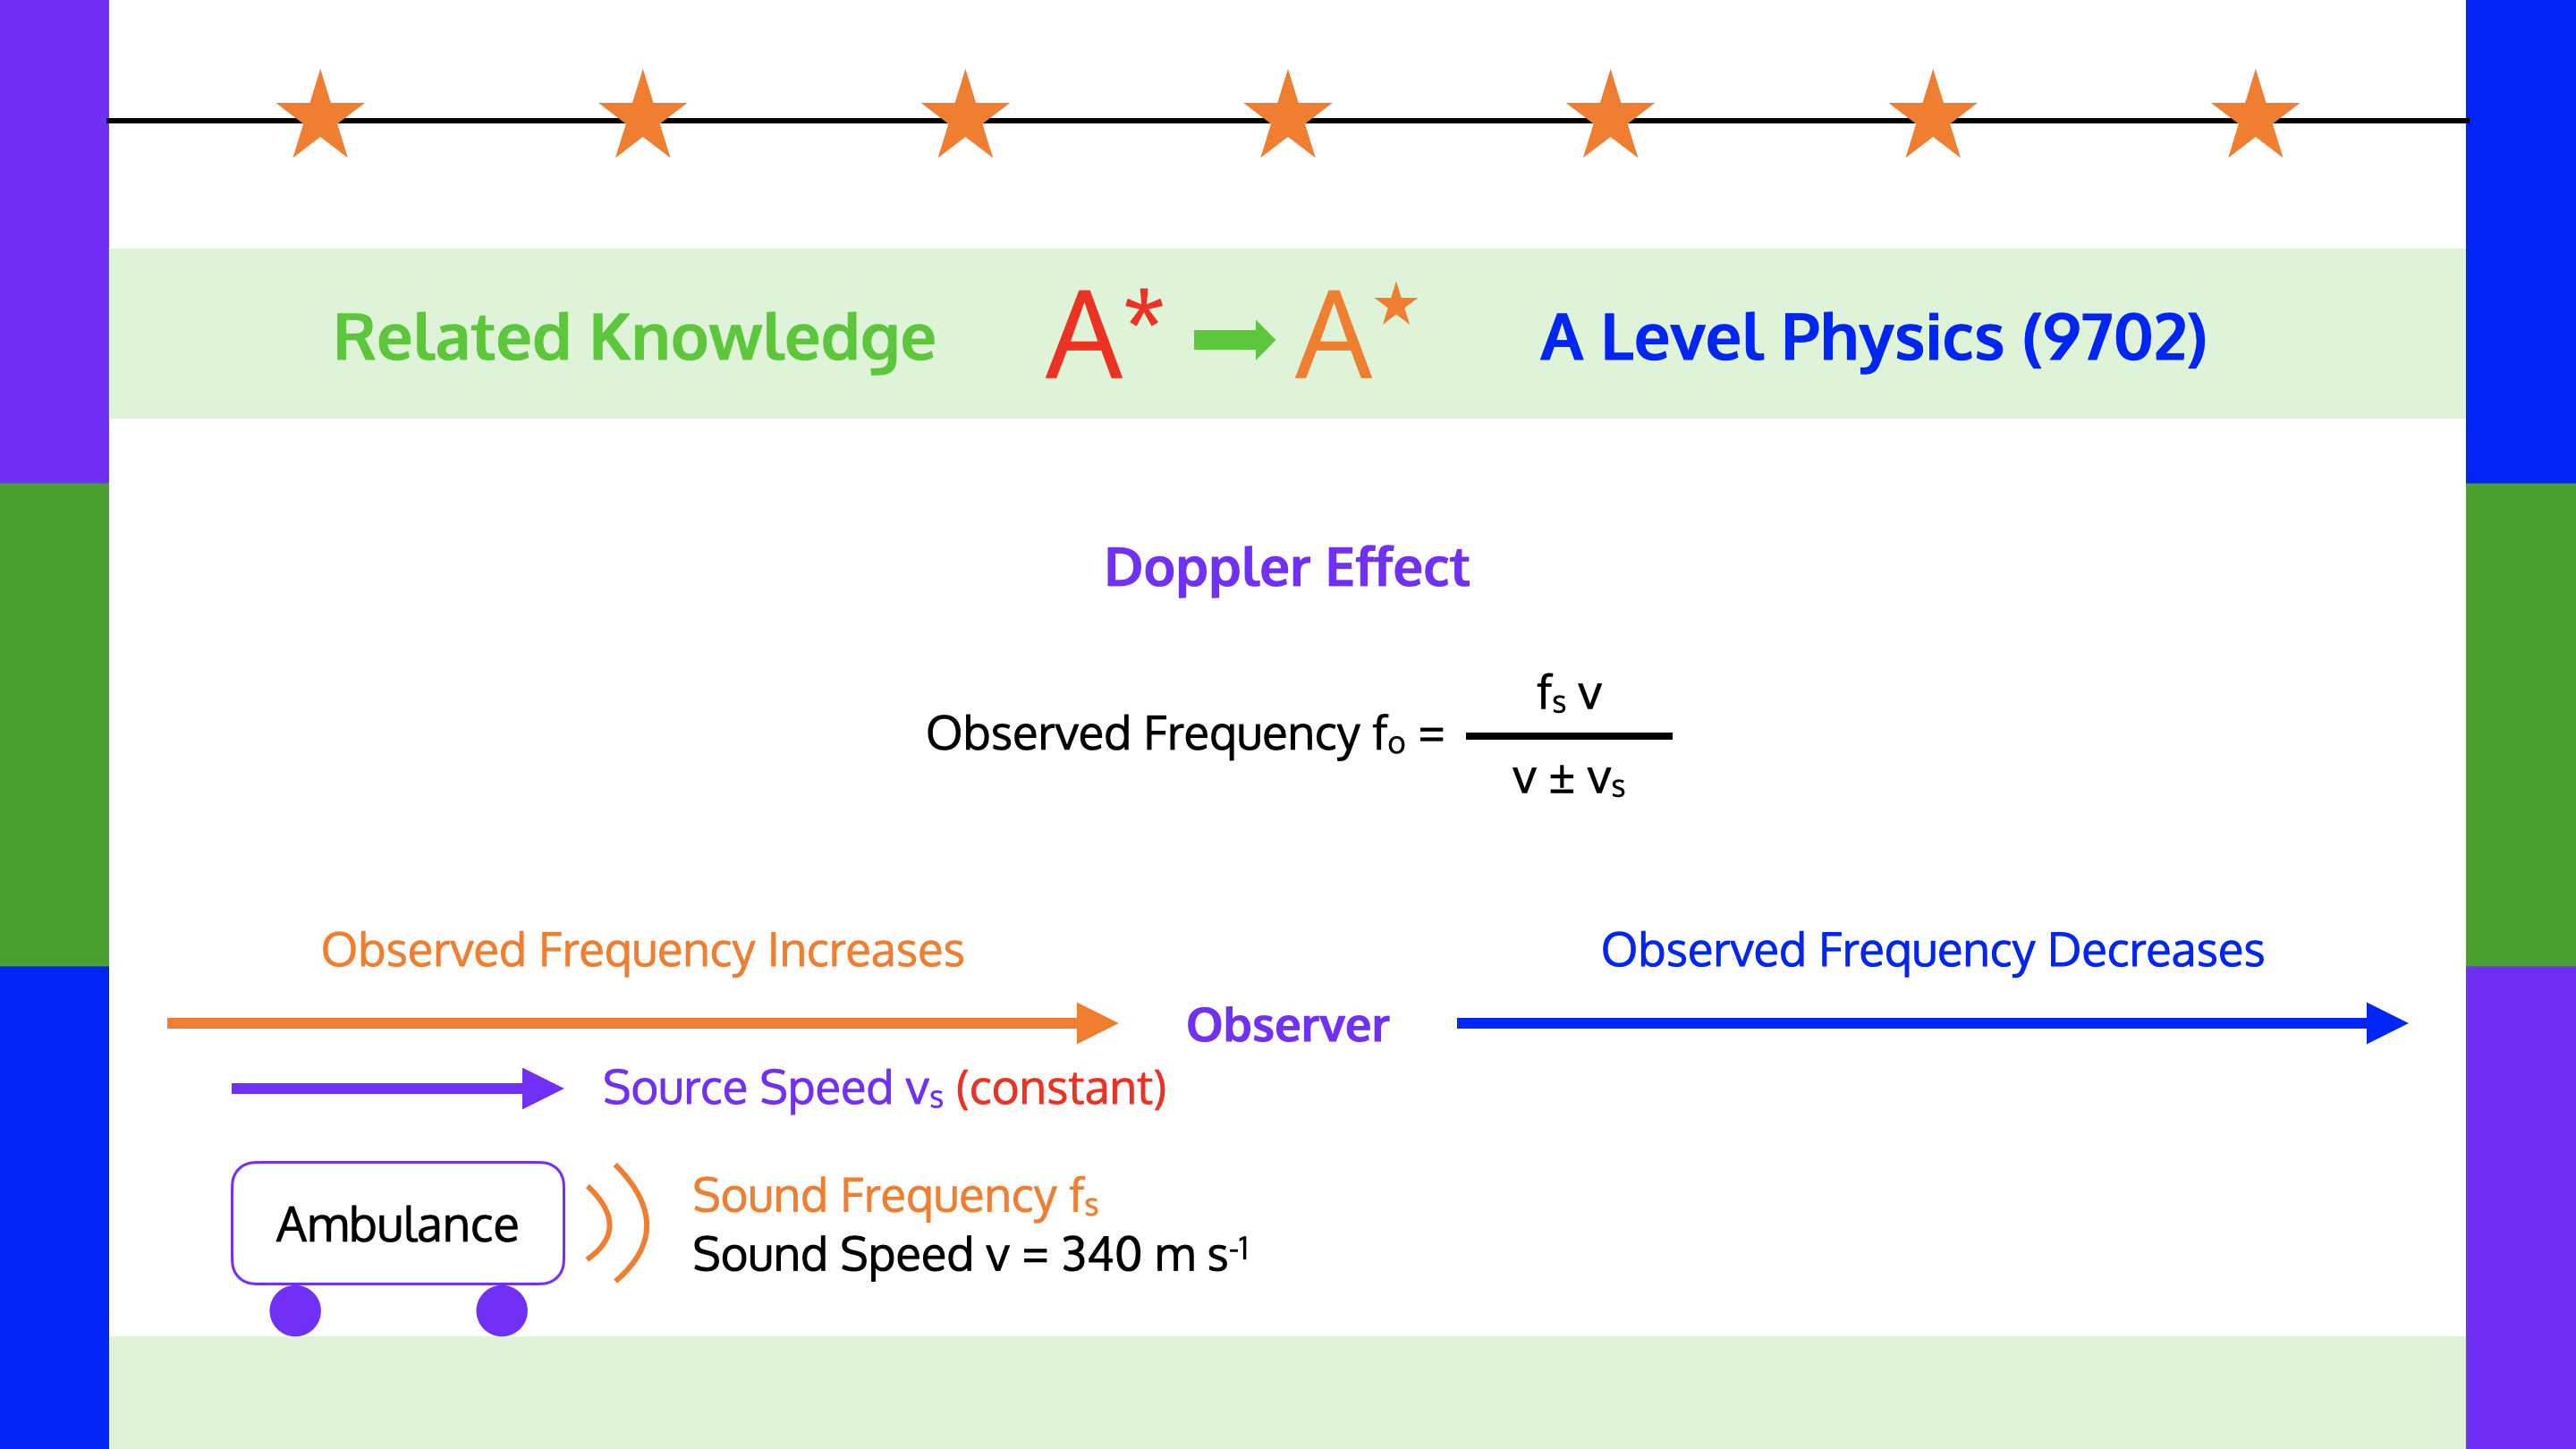 Physics (9702) Knowledge: Doppler Effect